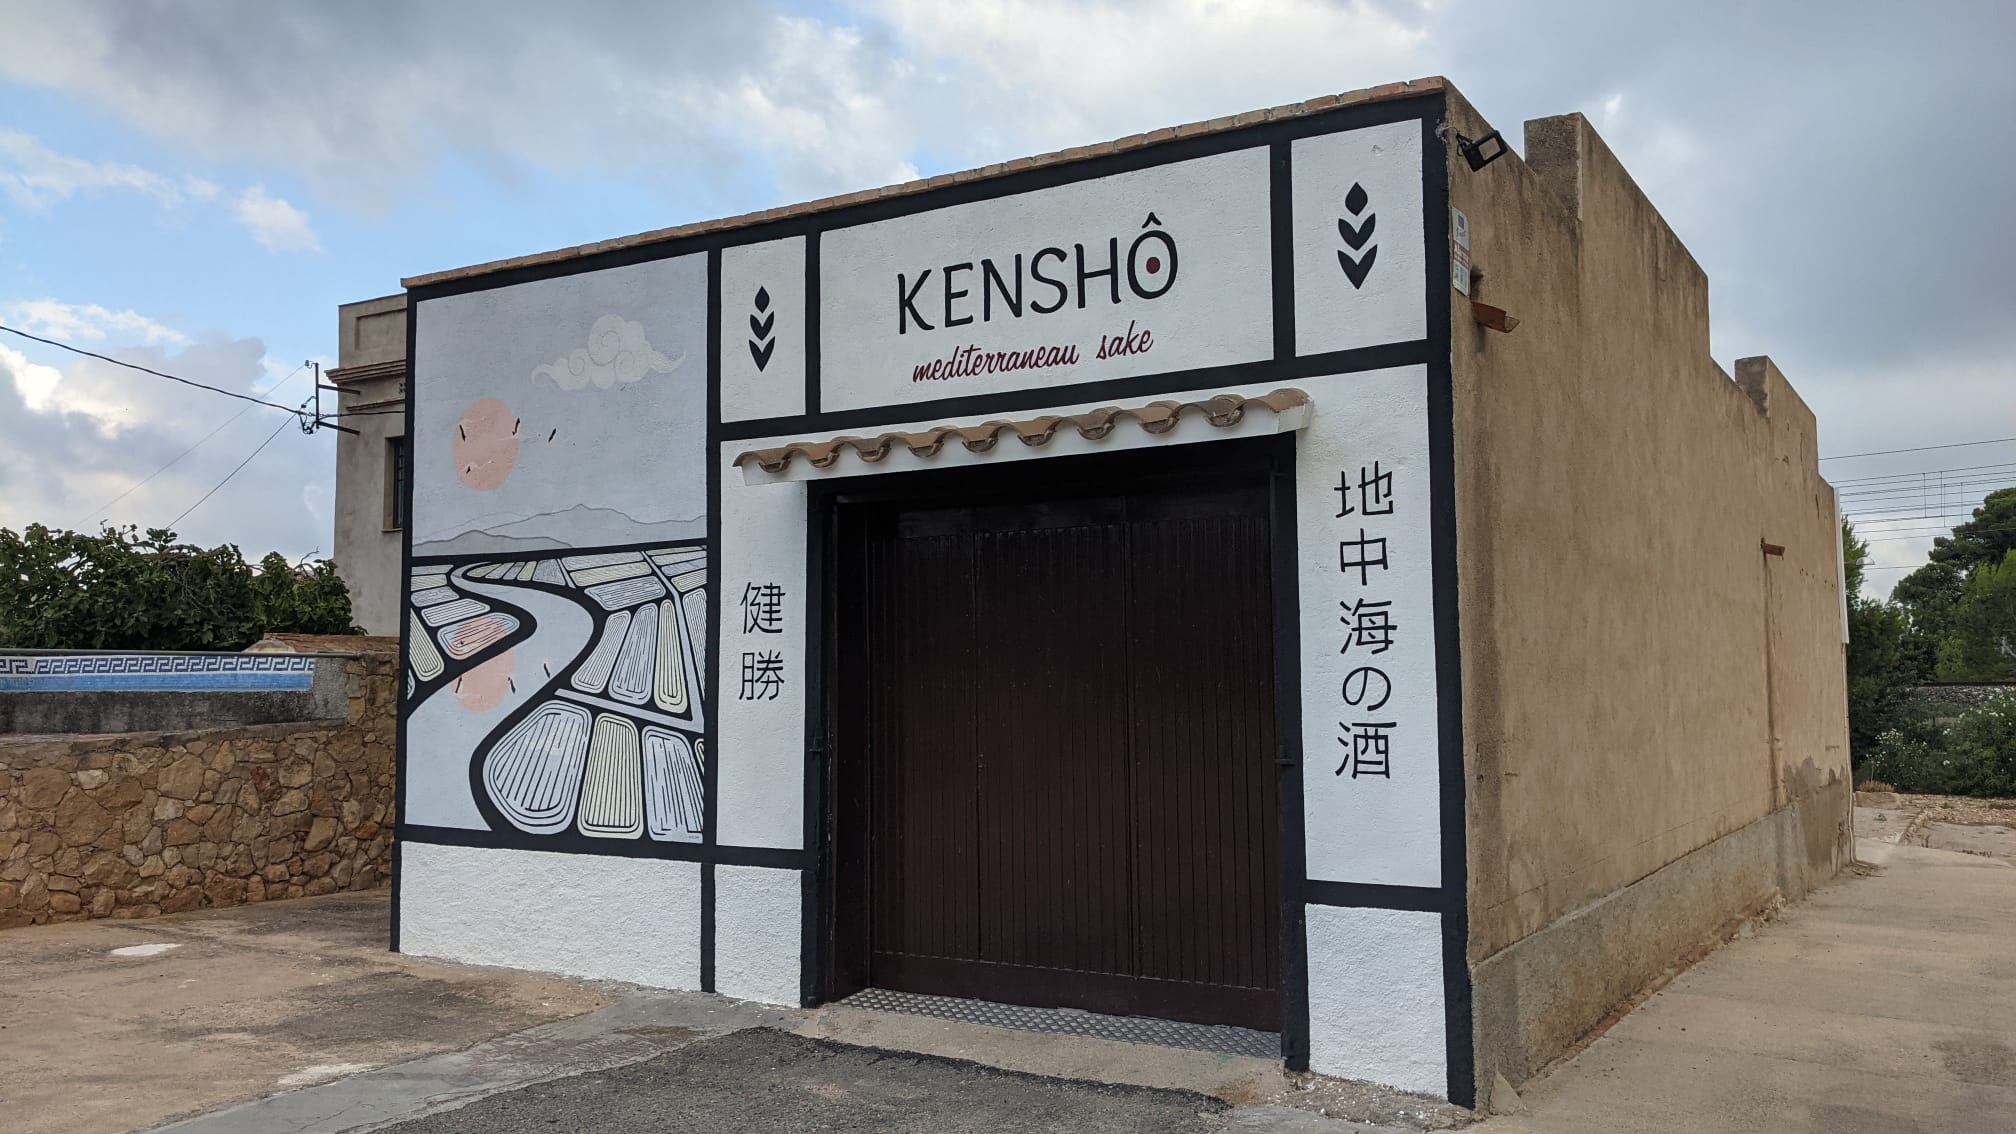 Kensho, Mediterranean sake brewery in L'Ampolla, near the Ebre Delta (by Cillian Shields)